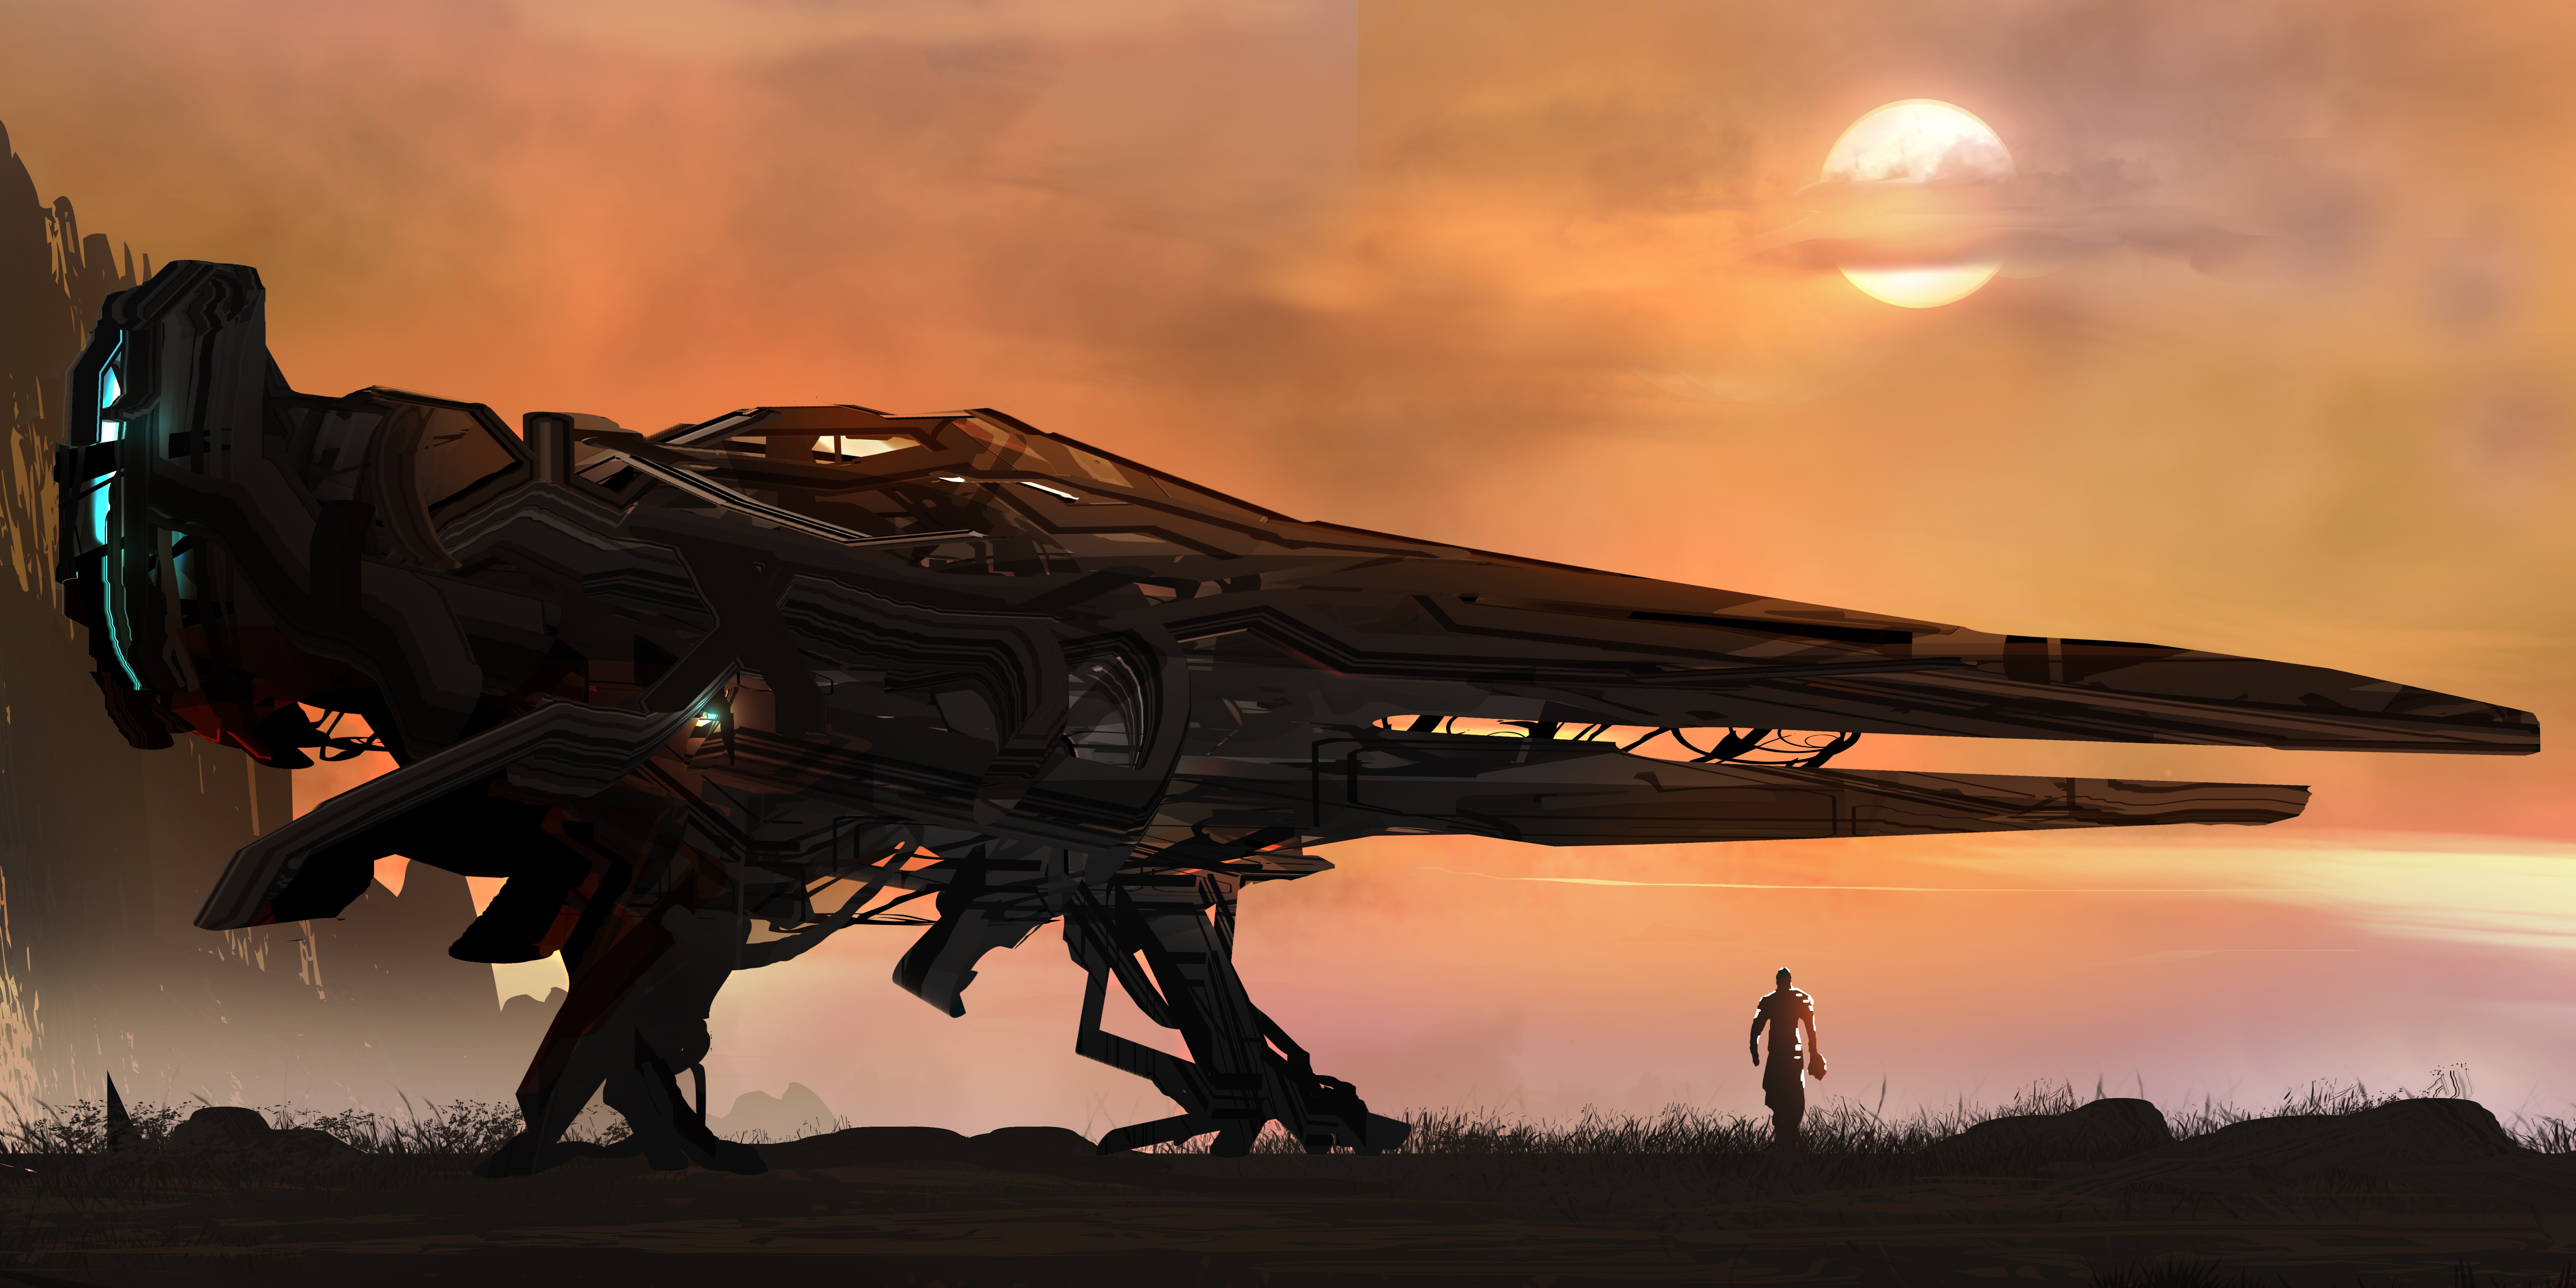 General 7200x3600 science fiction spaceship horizon artwork DeviantArt sky